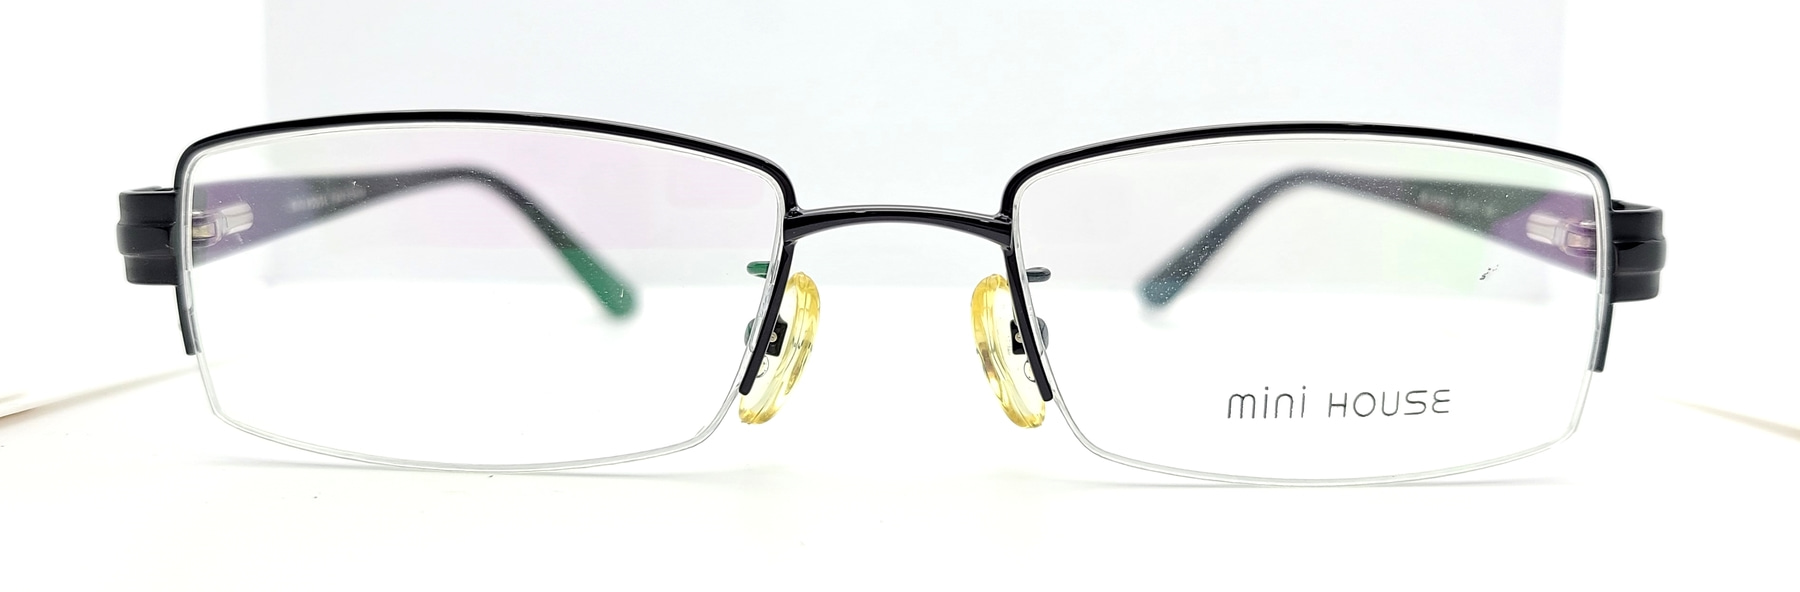 MINIHOUSE M-1070-1, Korean glasses, sunglasses, eyeglasses, glasses